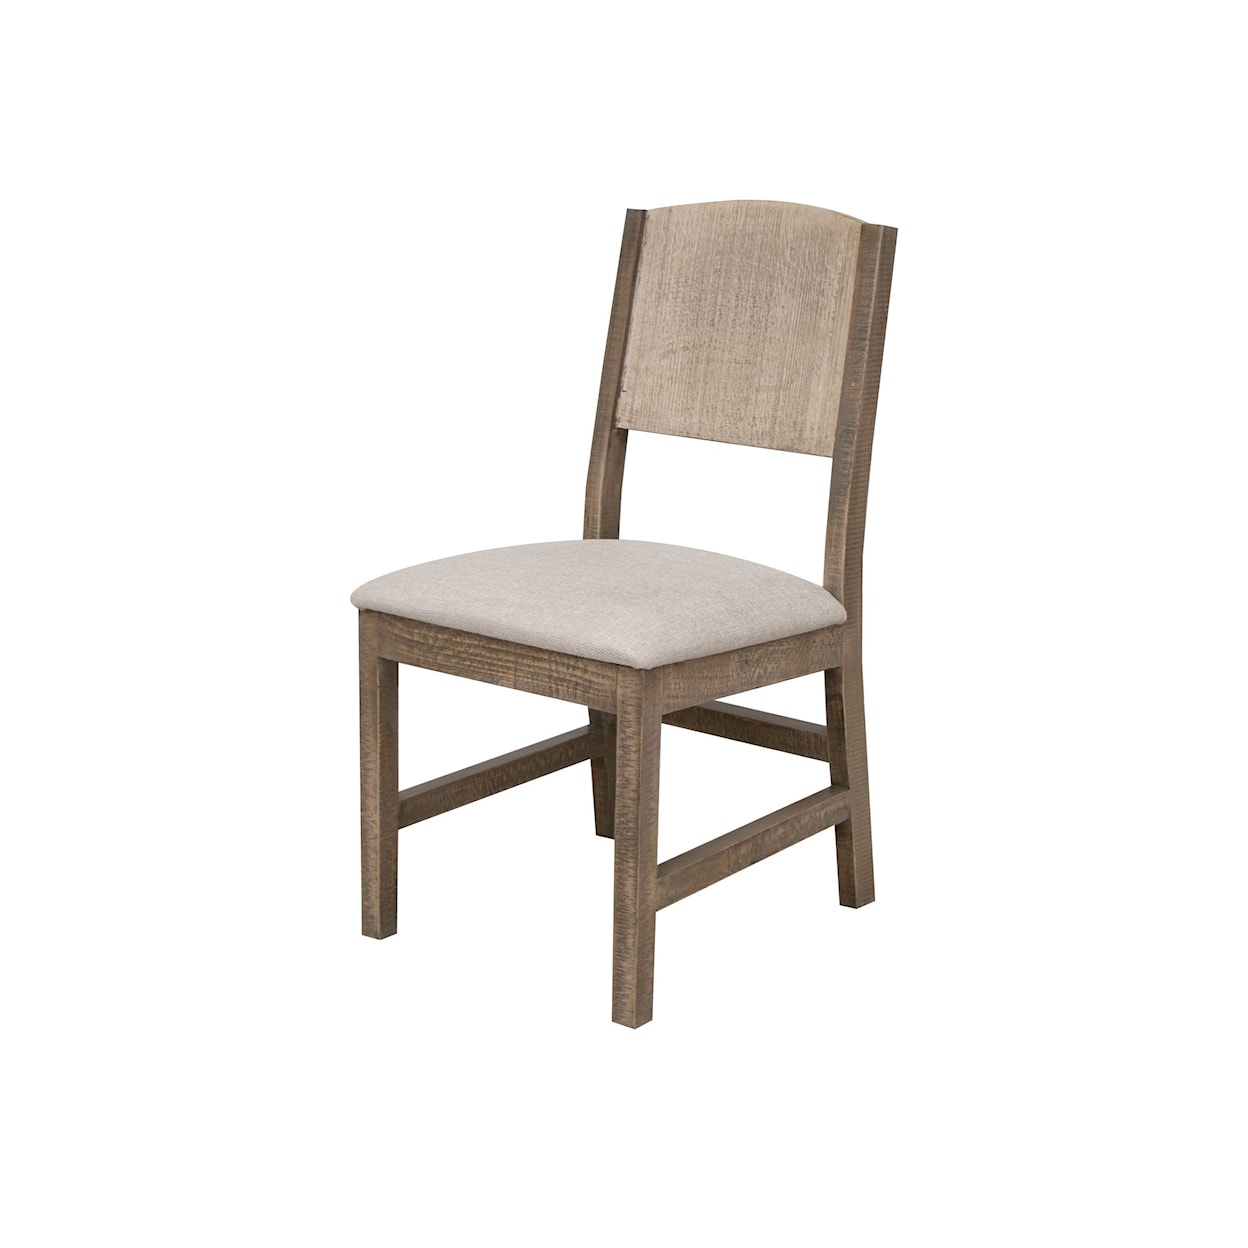 IFD International Furniture Direct Cosalá Chair